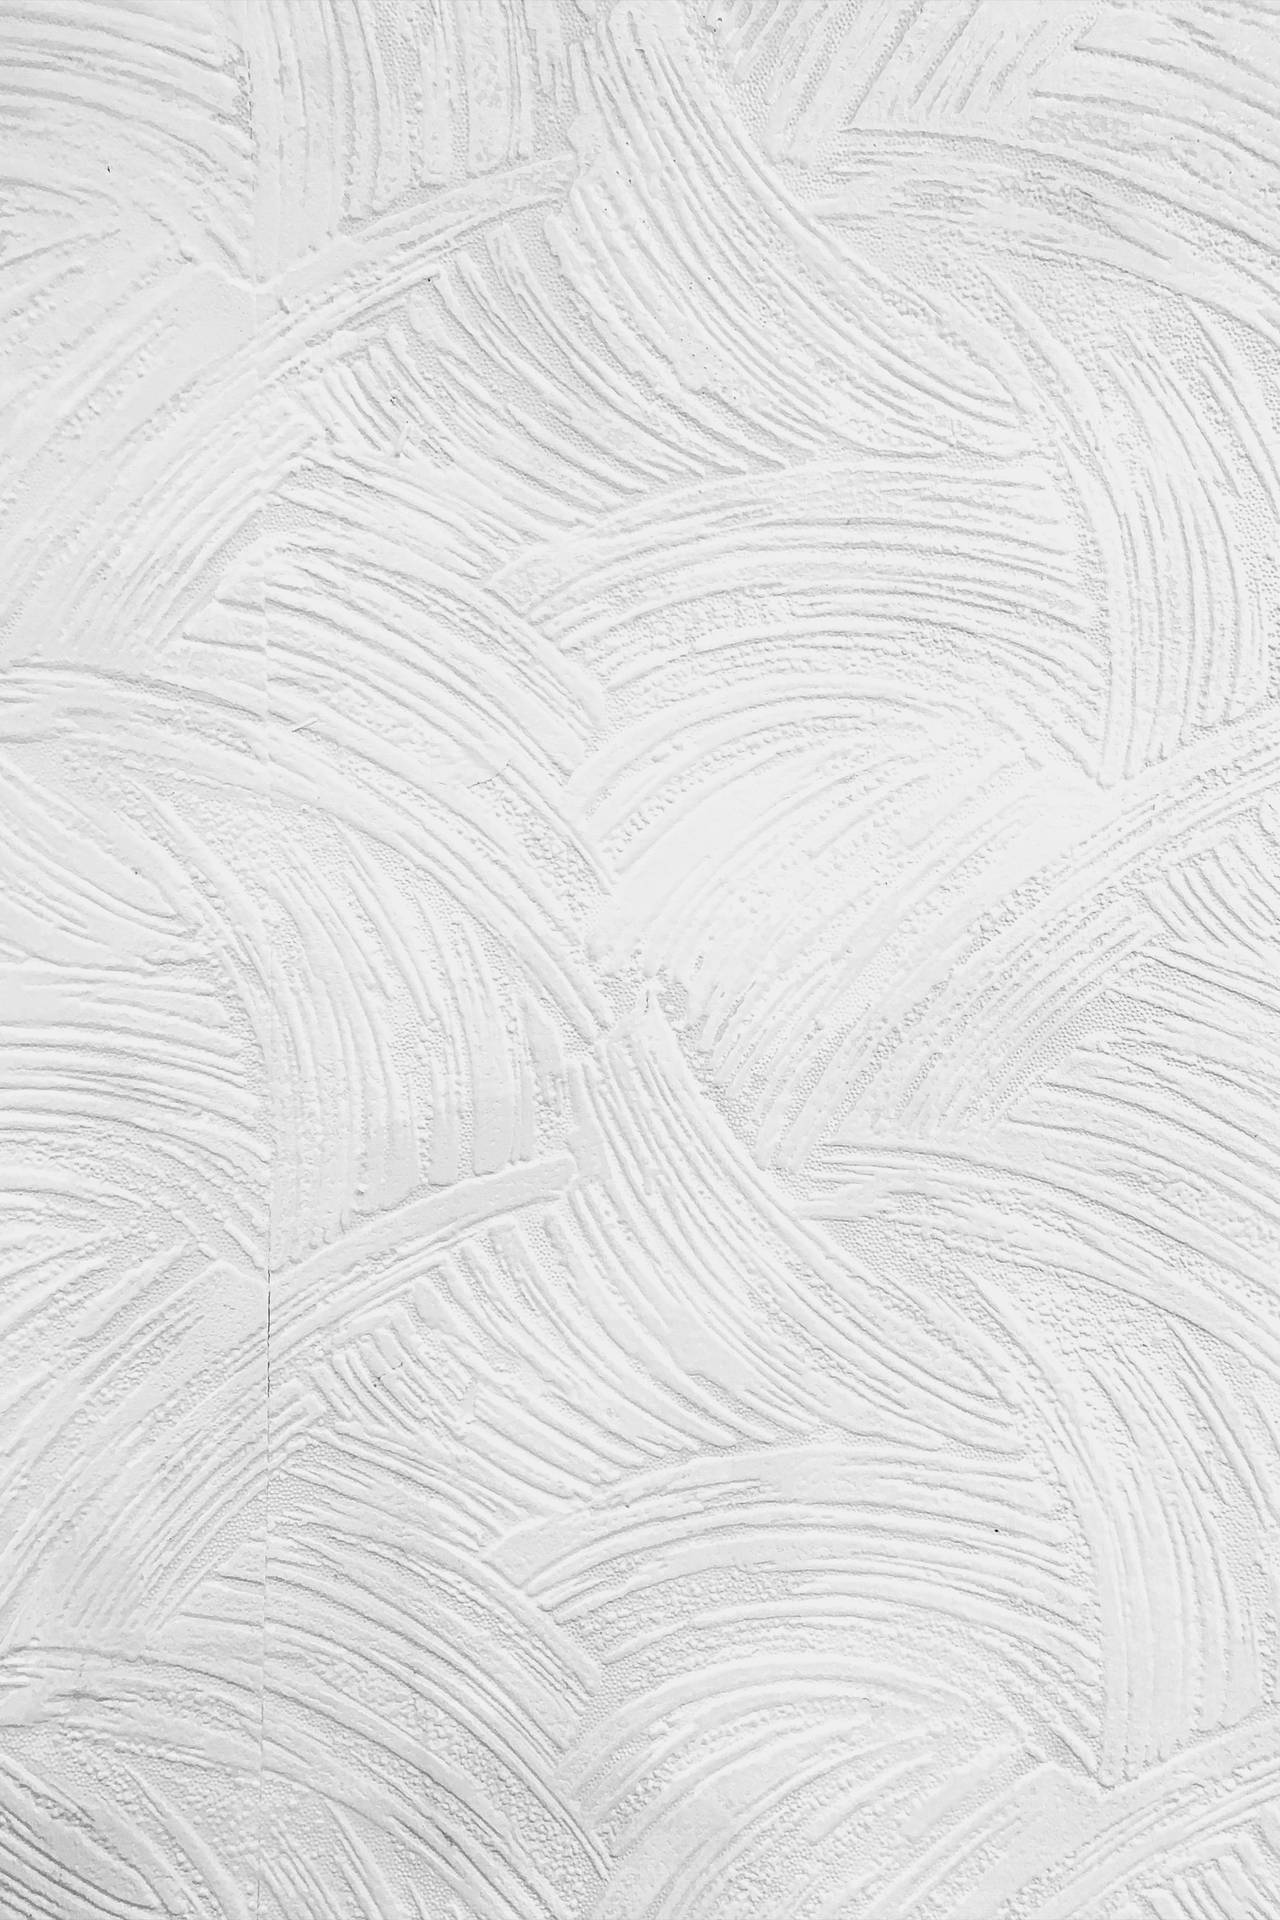 Solid White Texture Design Background